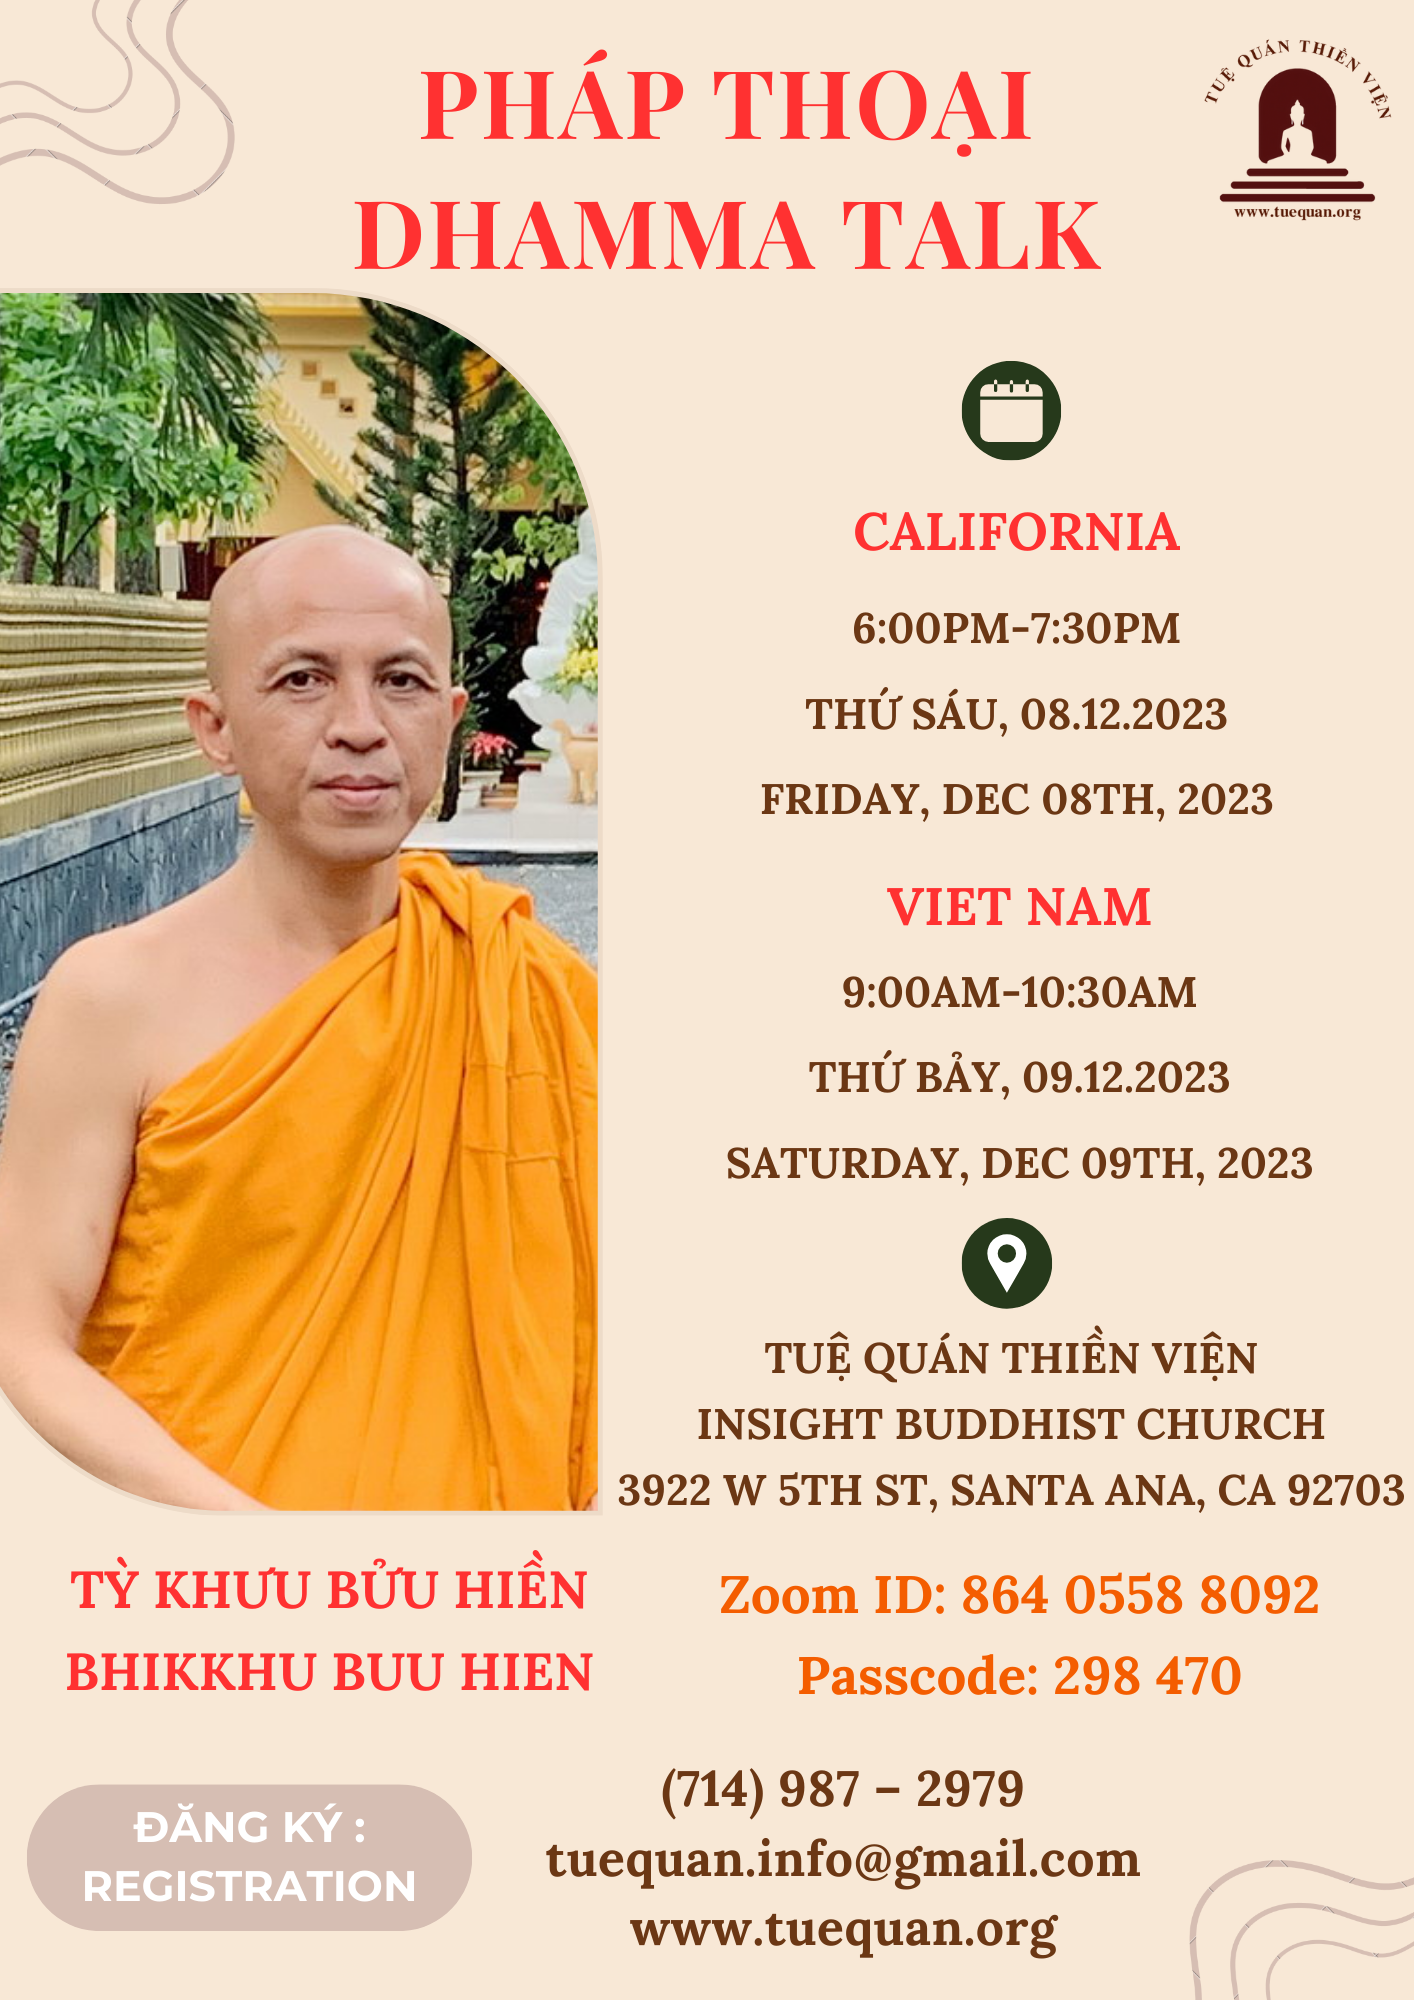 Friday Dhamma Talk, Dec 08th, 2023